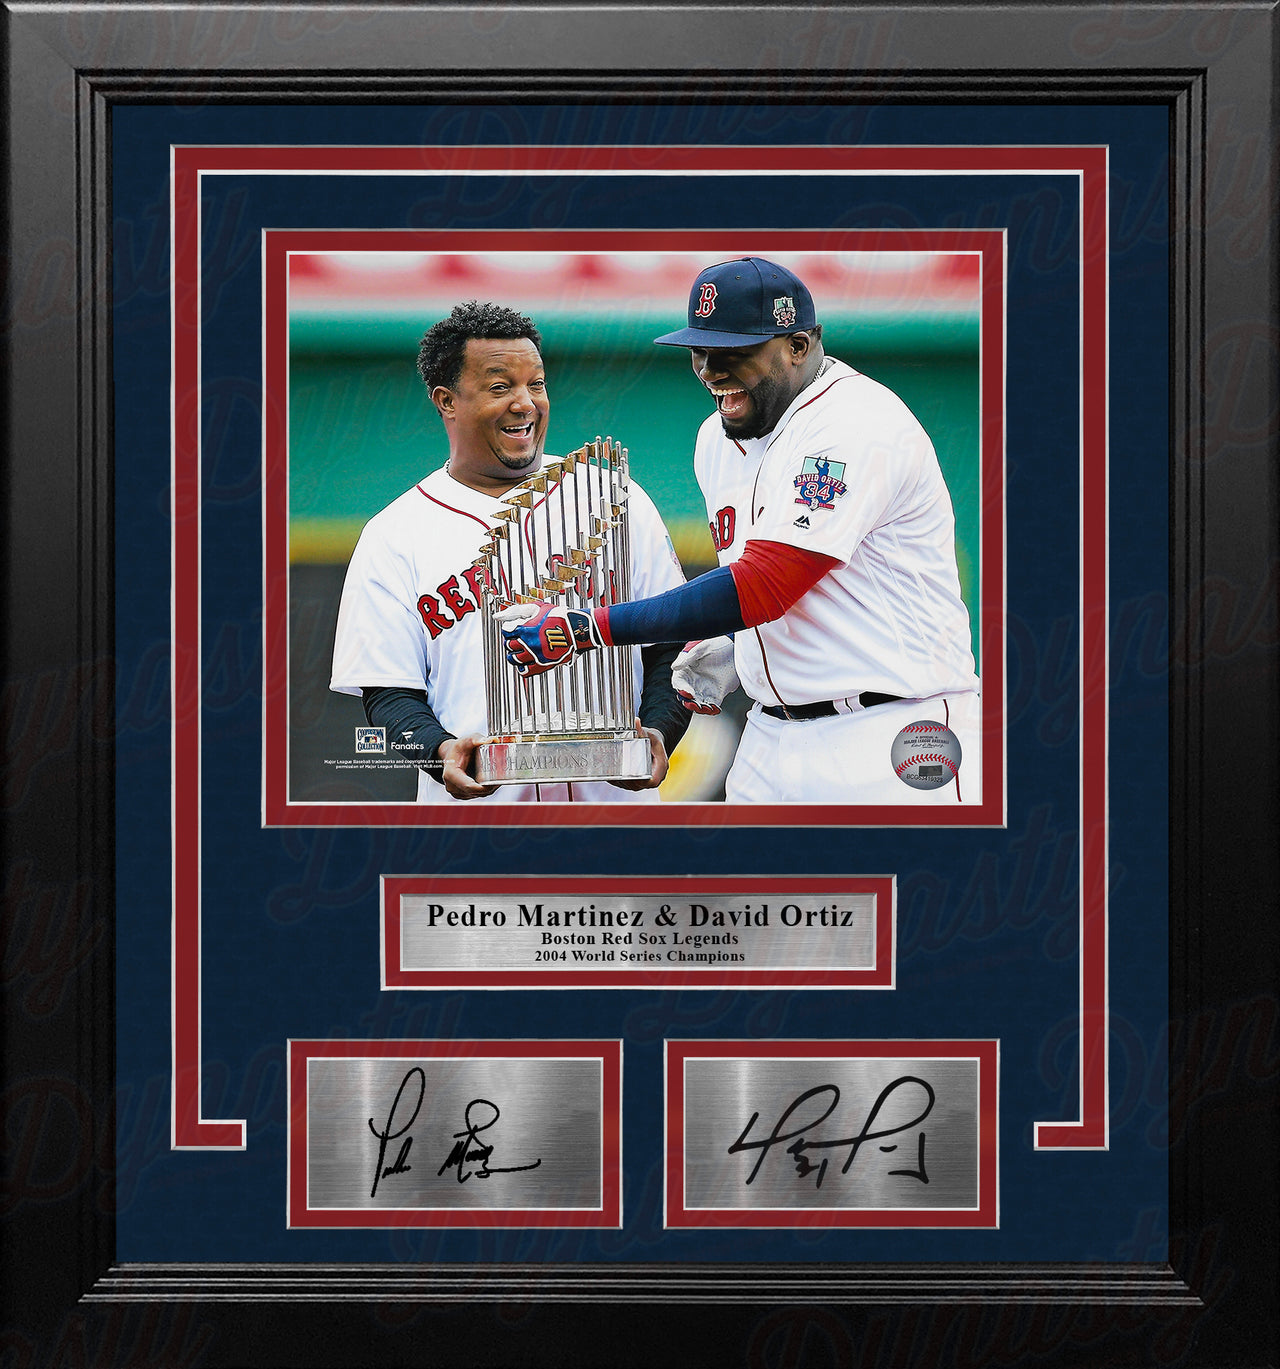 Pedro Martinez & David Ortiz Trophy Boston Red Sox 8x10 Framed Photo with Engraved Autographs - Dynasty Sports & Framing 